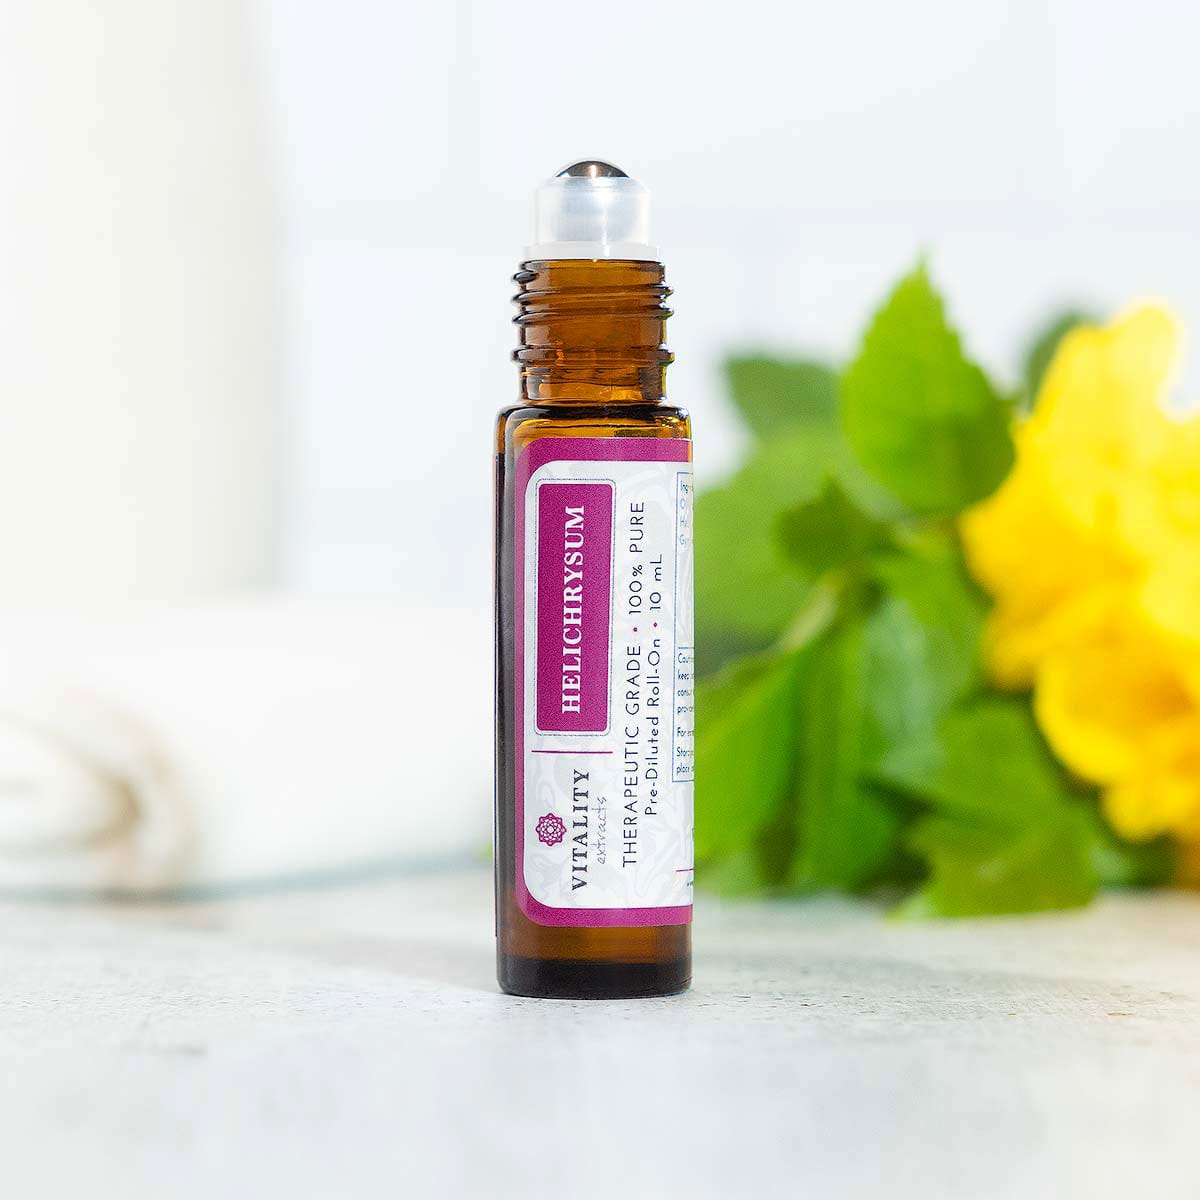 DōTERRA essential oils Helichrysum essential oil 5 ml. - Bliz Wellness